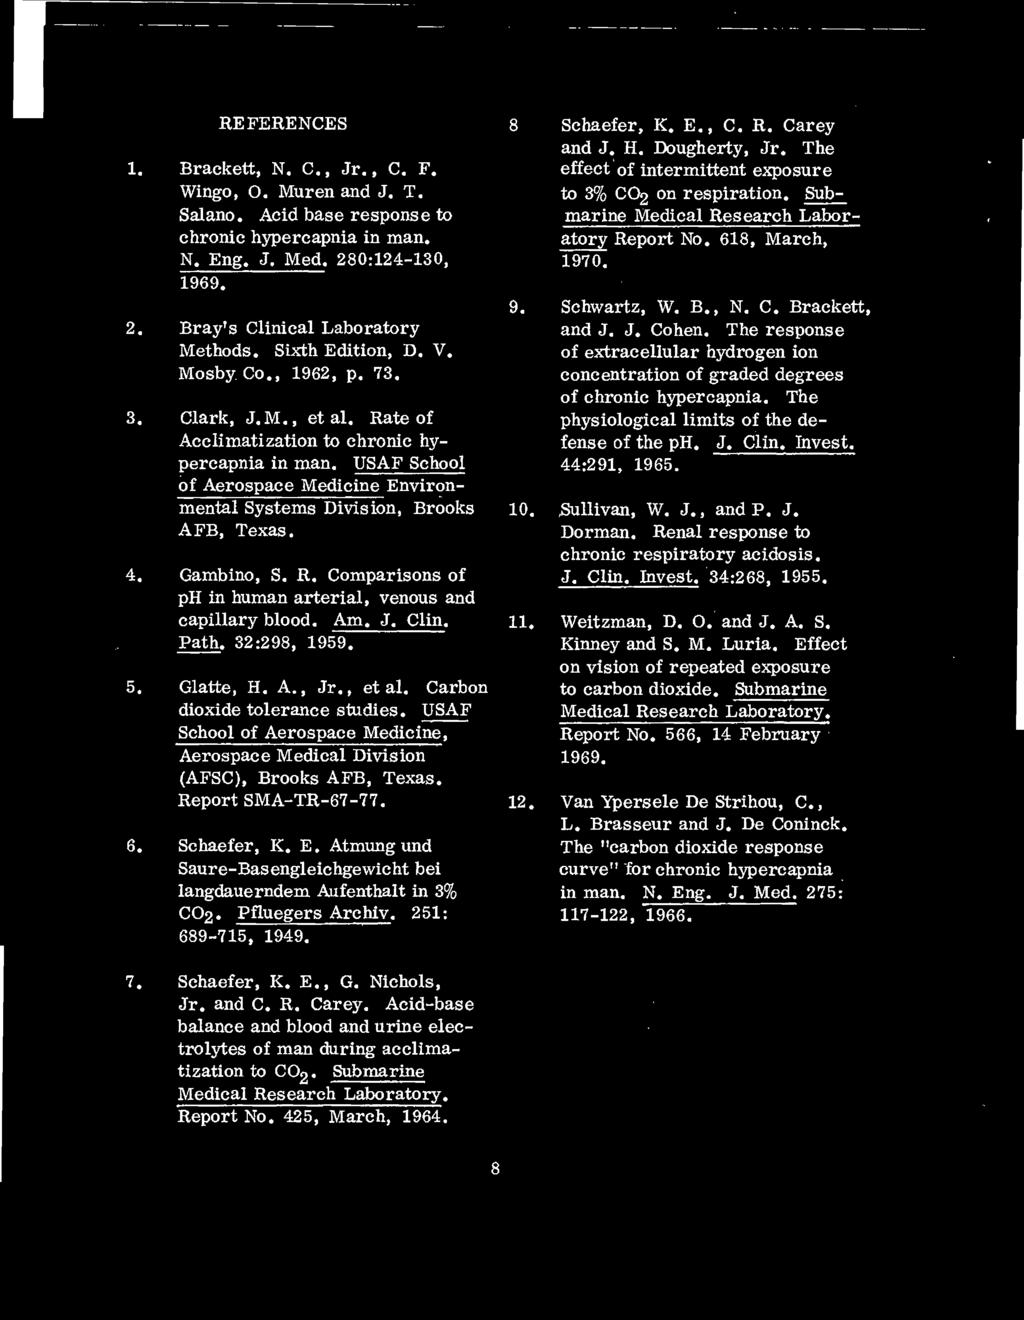 AFB, Texas. 4. Gambino, S. R. Comparisons of ph in human arterial, venous and capillary blood. Am. J. Clin. 11. Path. 32:298, 1959. 5. Glatte, H. A., Jr., et al. Carbon dioxide tolerance studies.